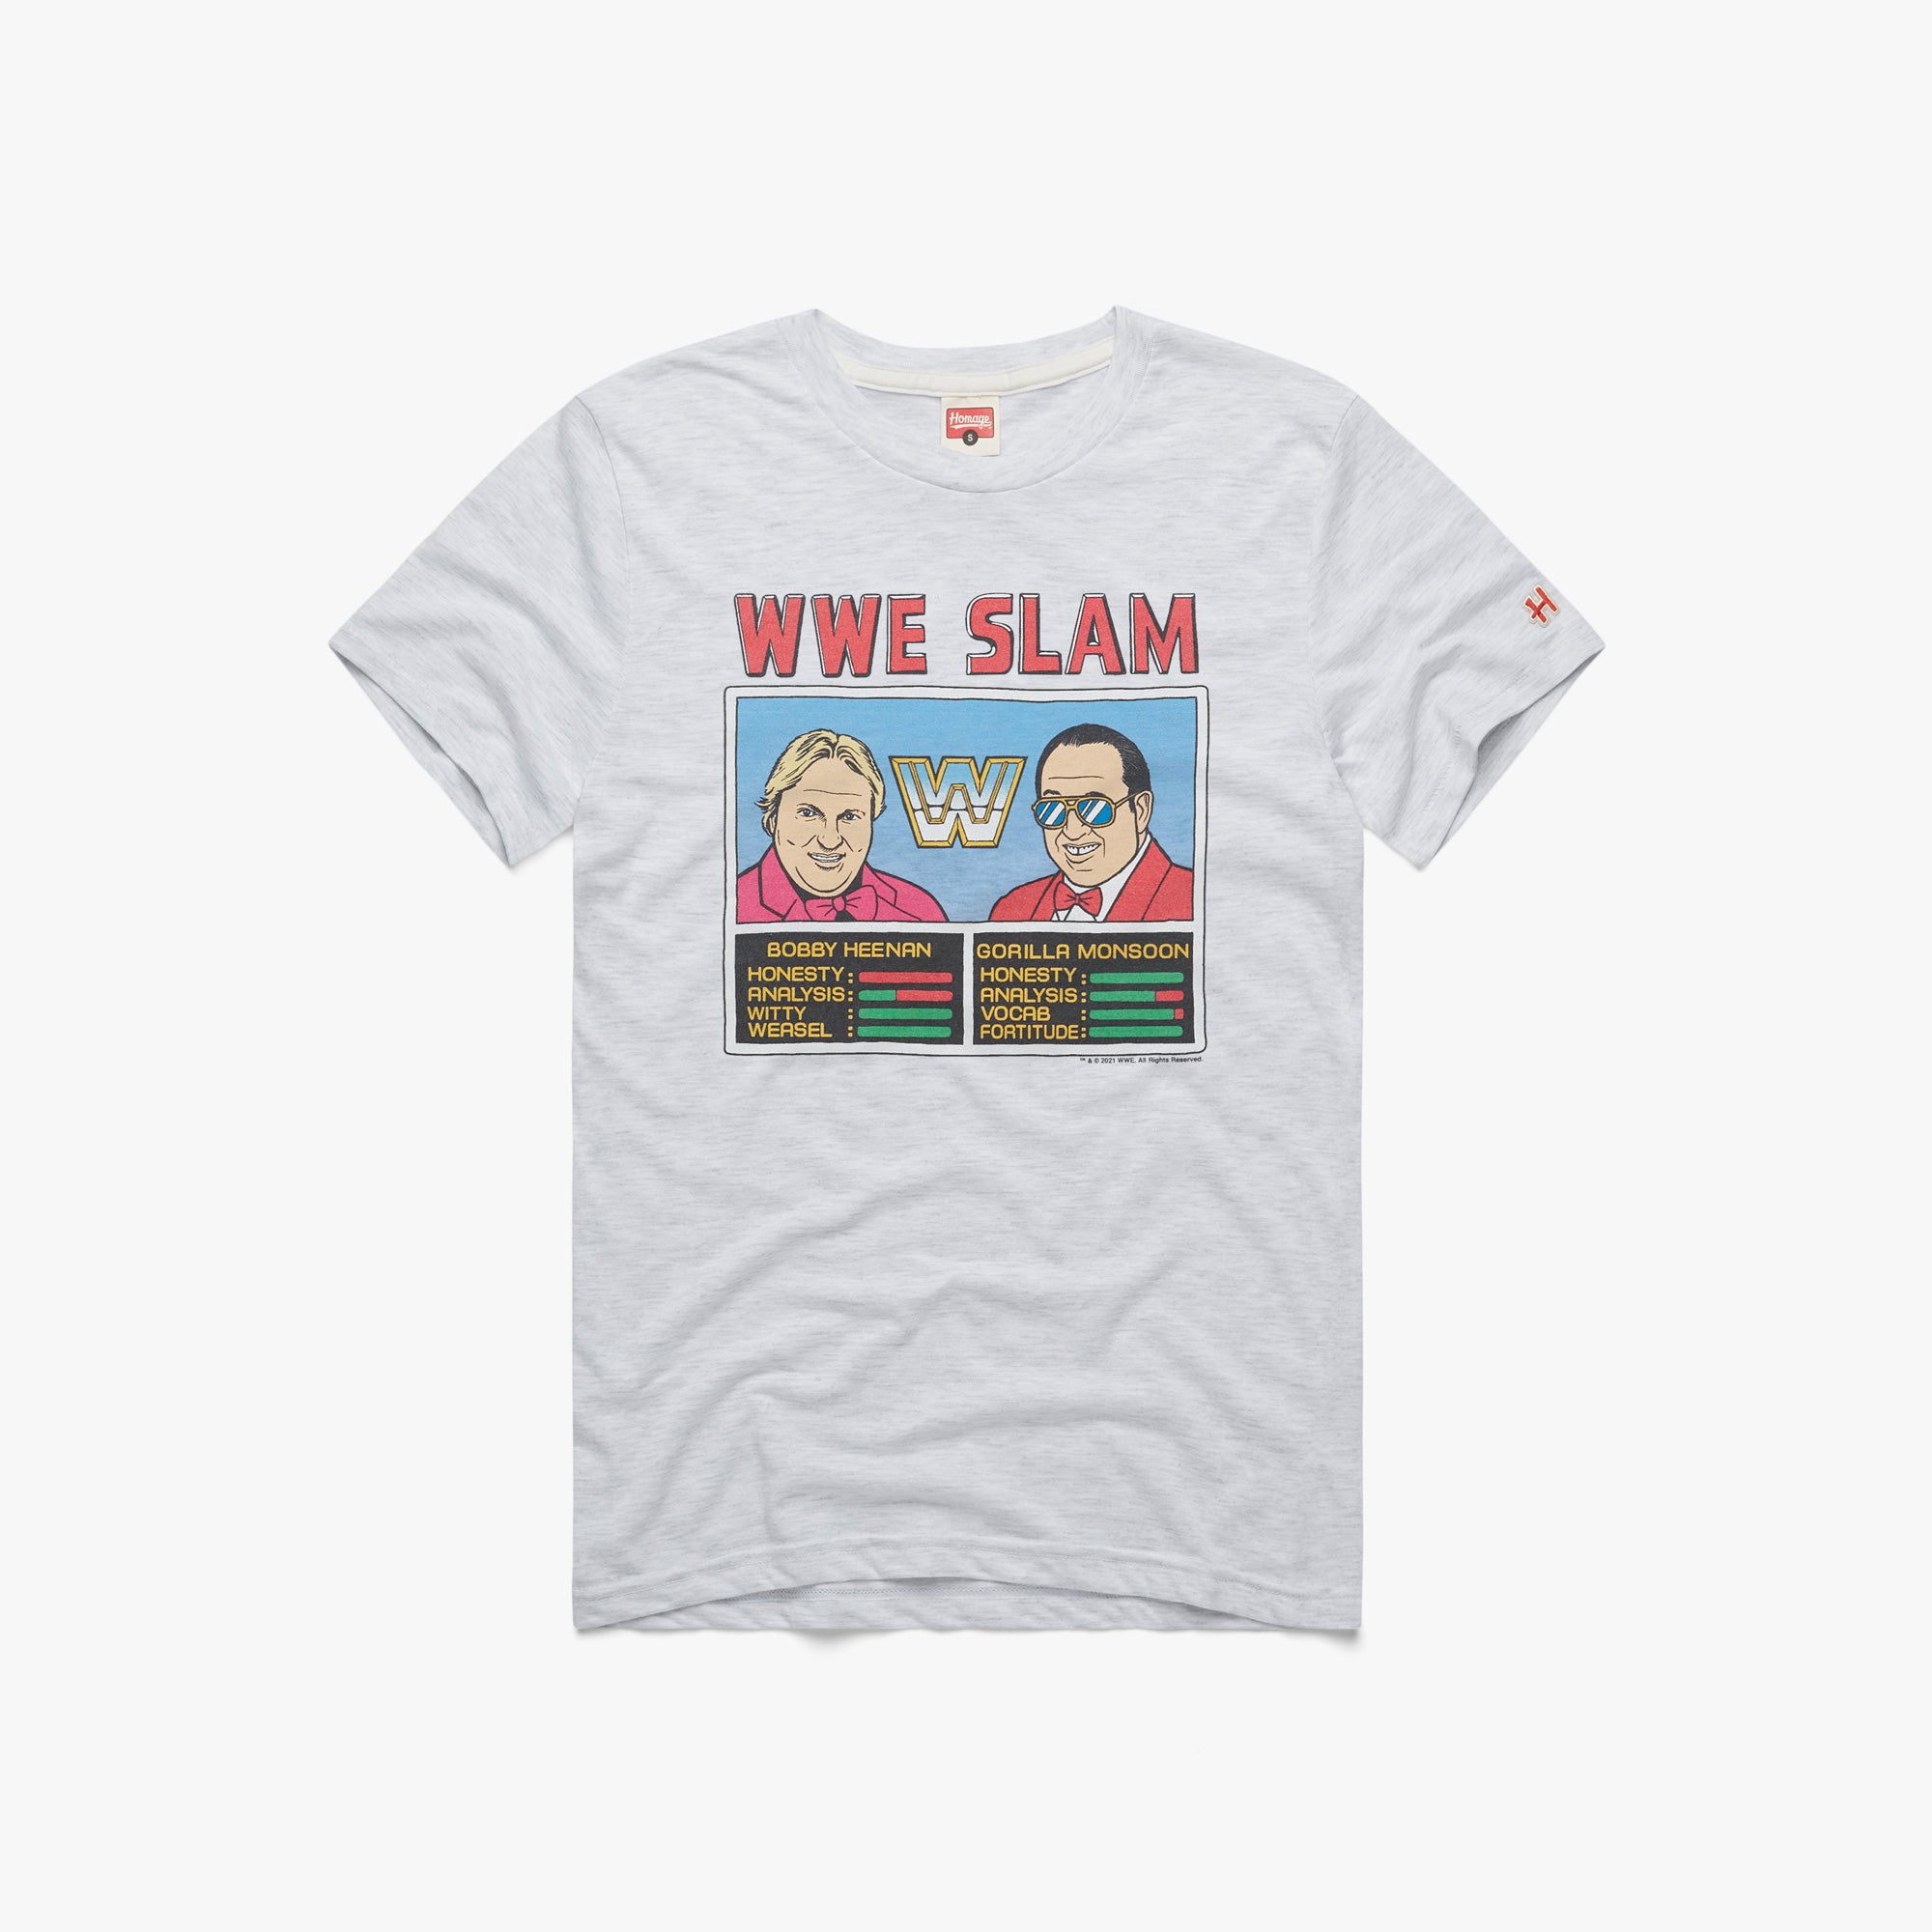 WWE Slam Bobby Heenan And Gorilla Monsoon